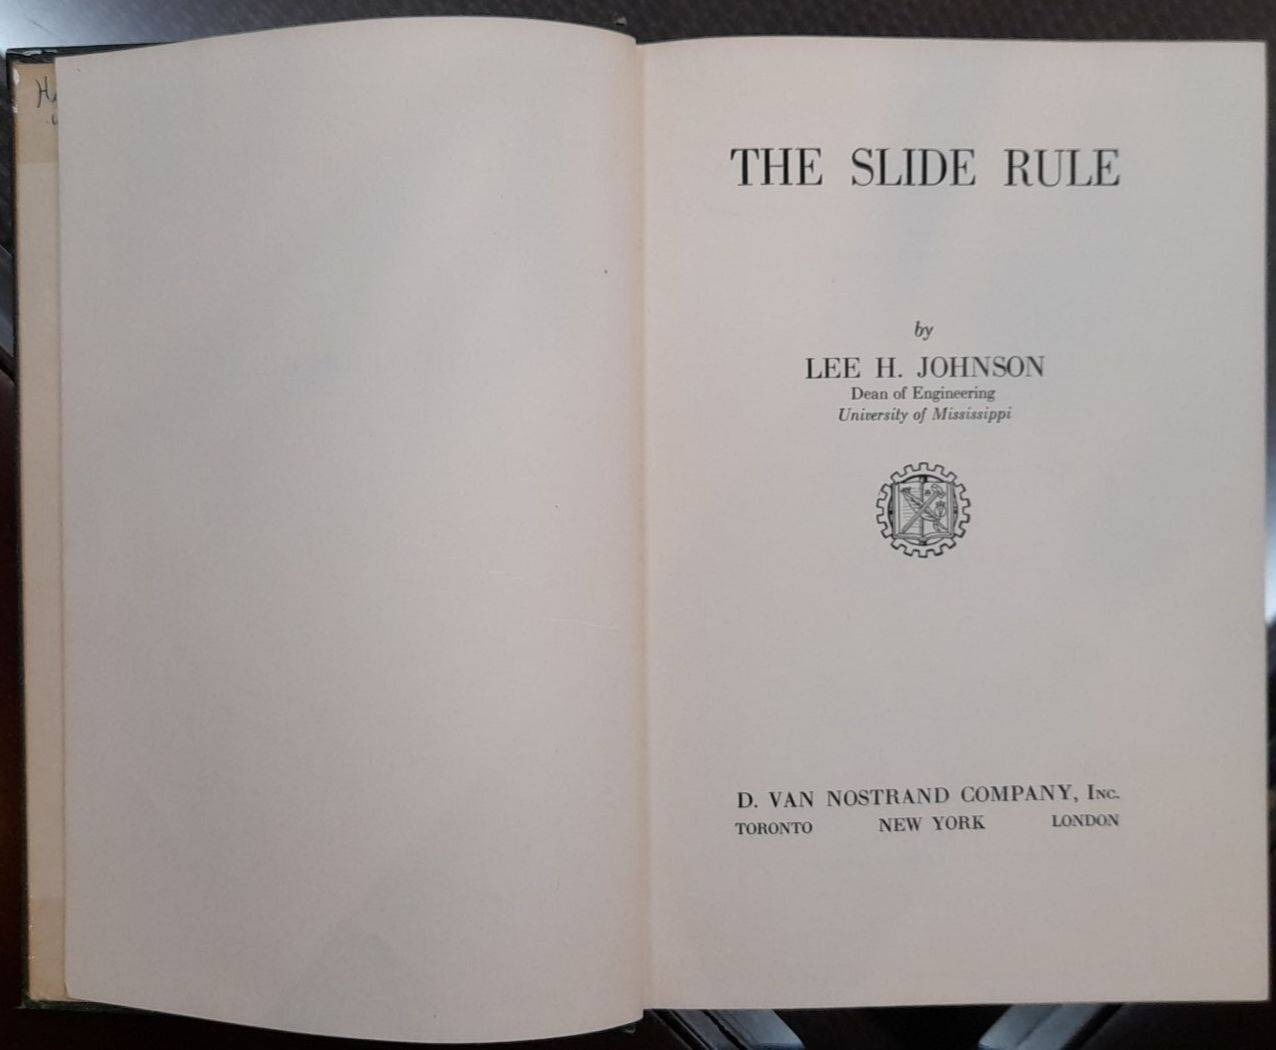 The Slide Rule: título